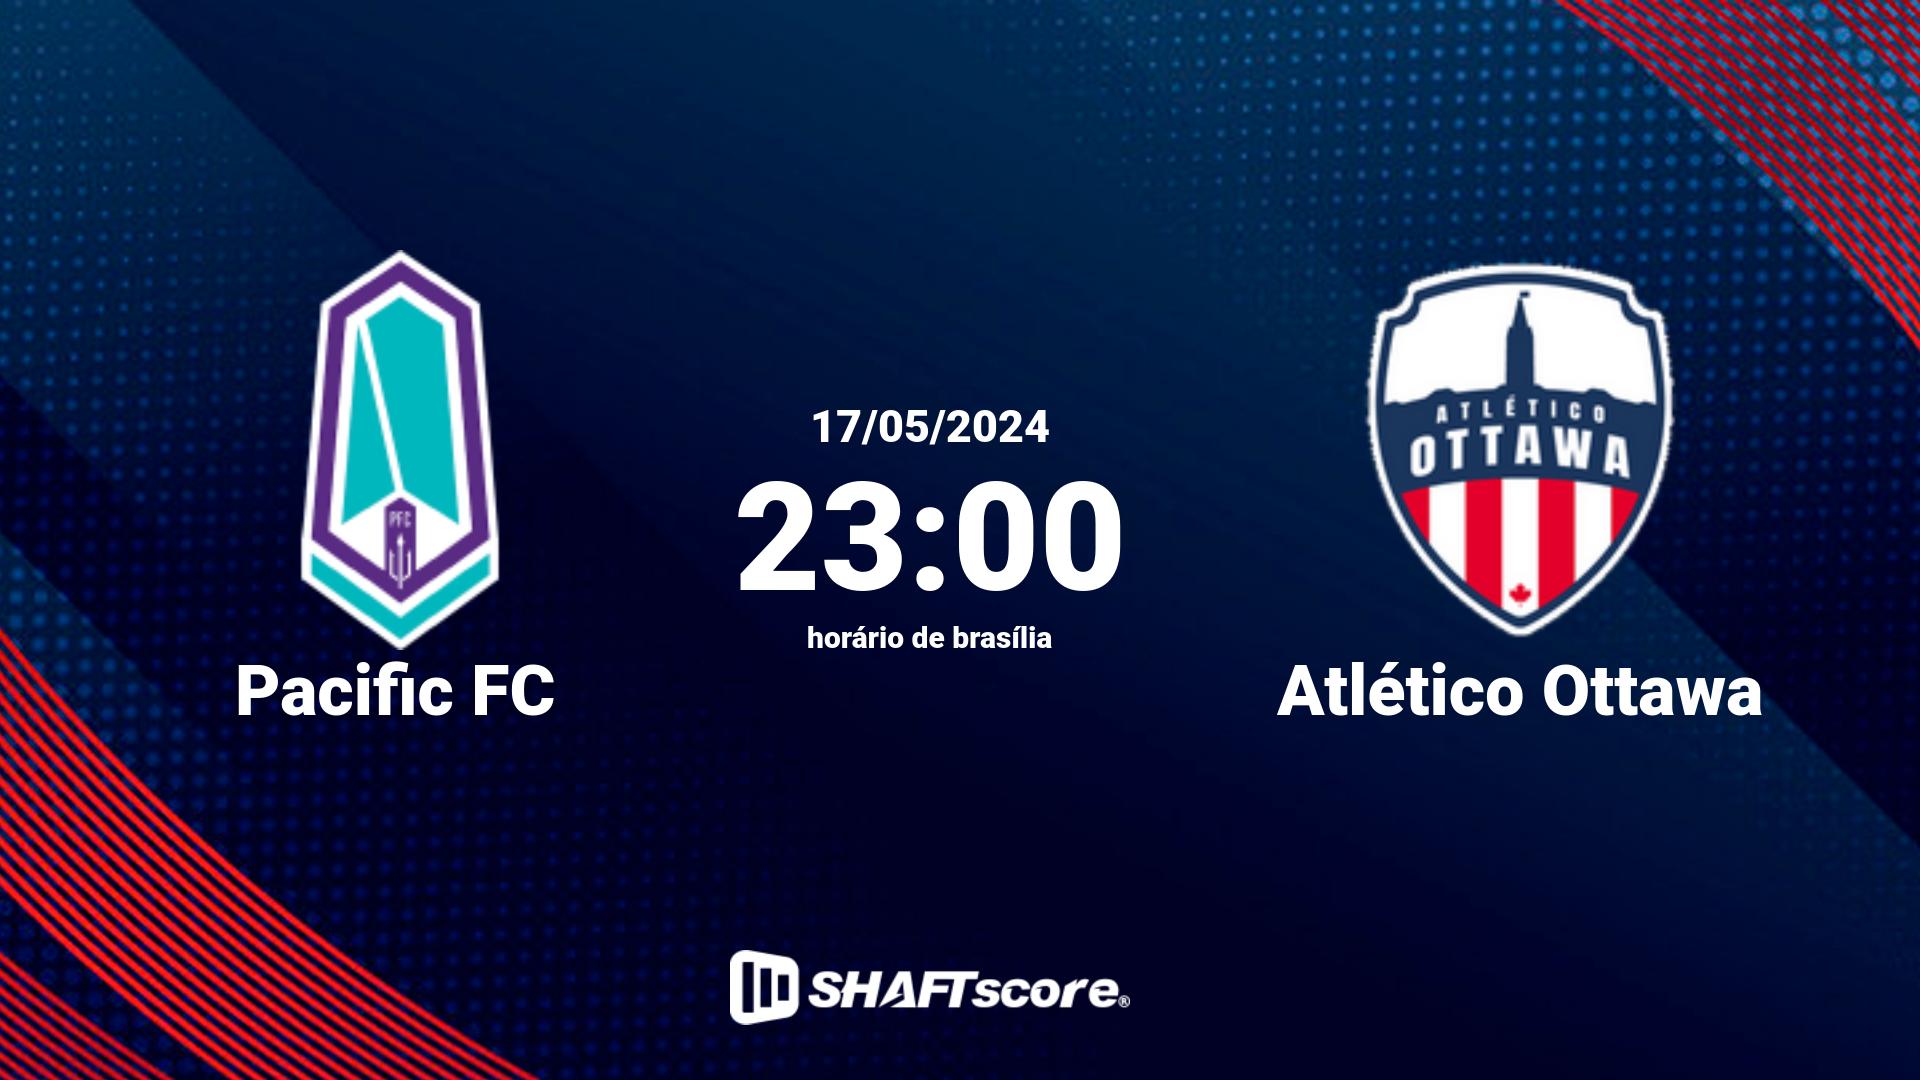 Estatísticas do jogo Pacific FC vs Atlético Ottawa 17.05 23:00